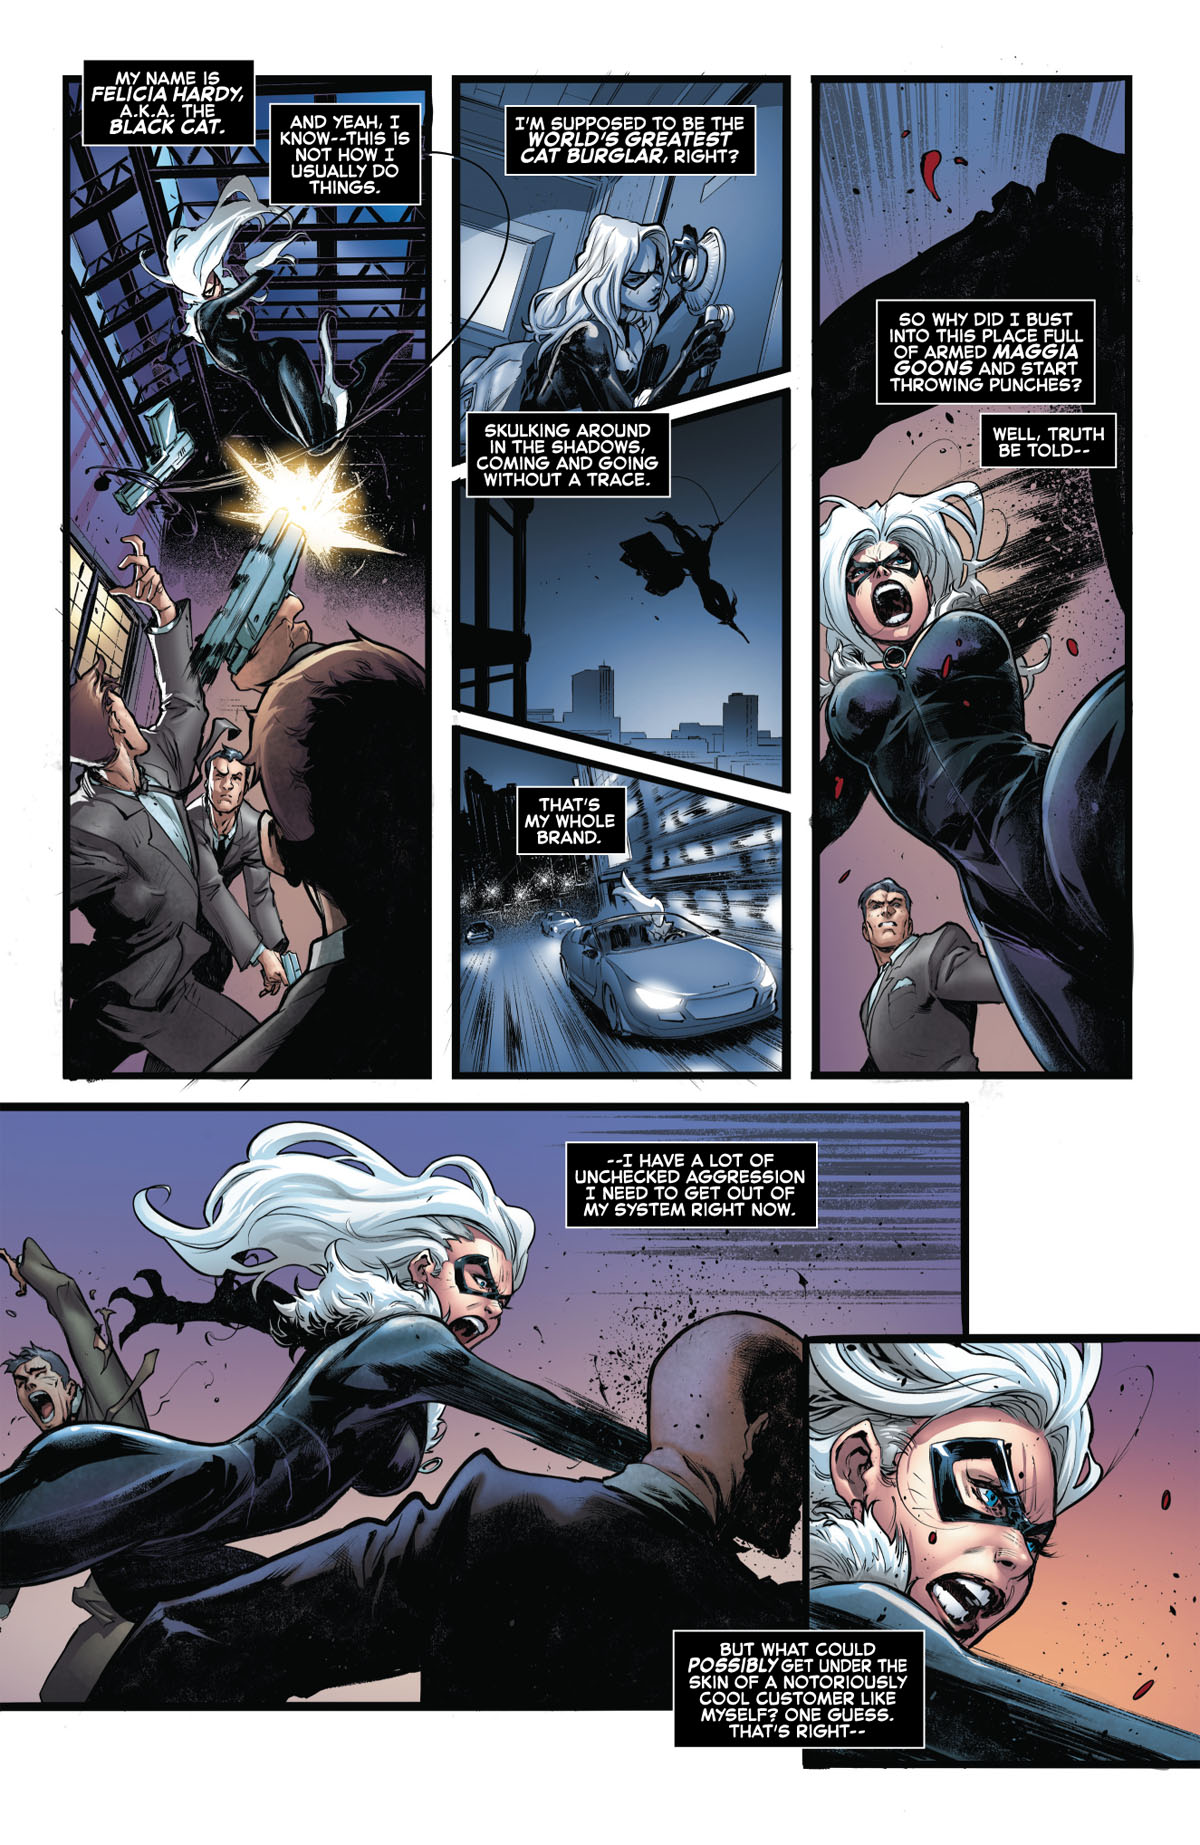 Amazing Spider-Man #16.HU page 1